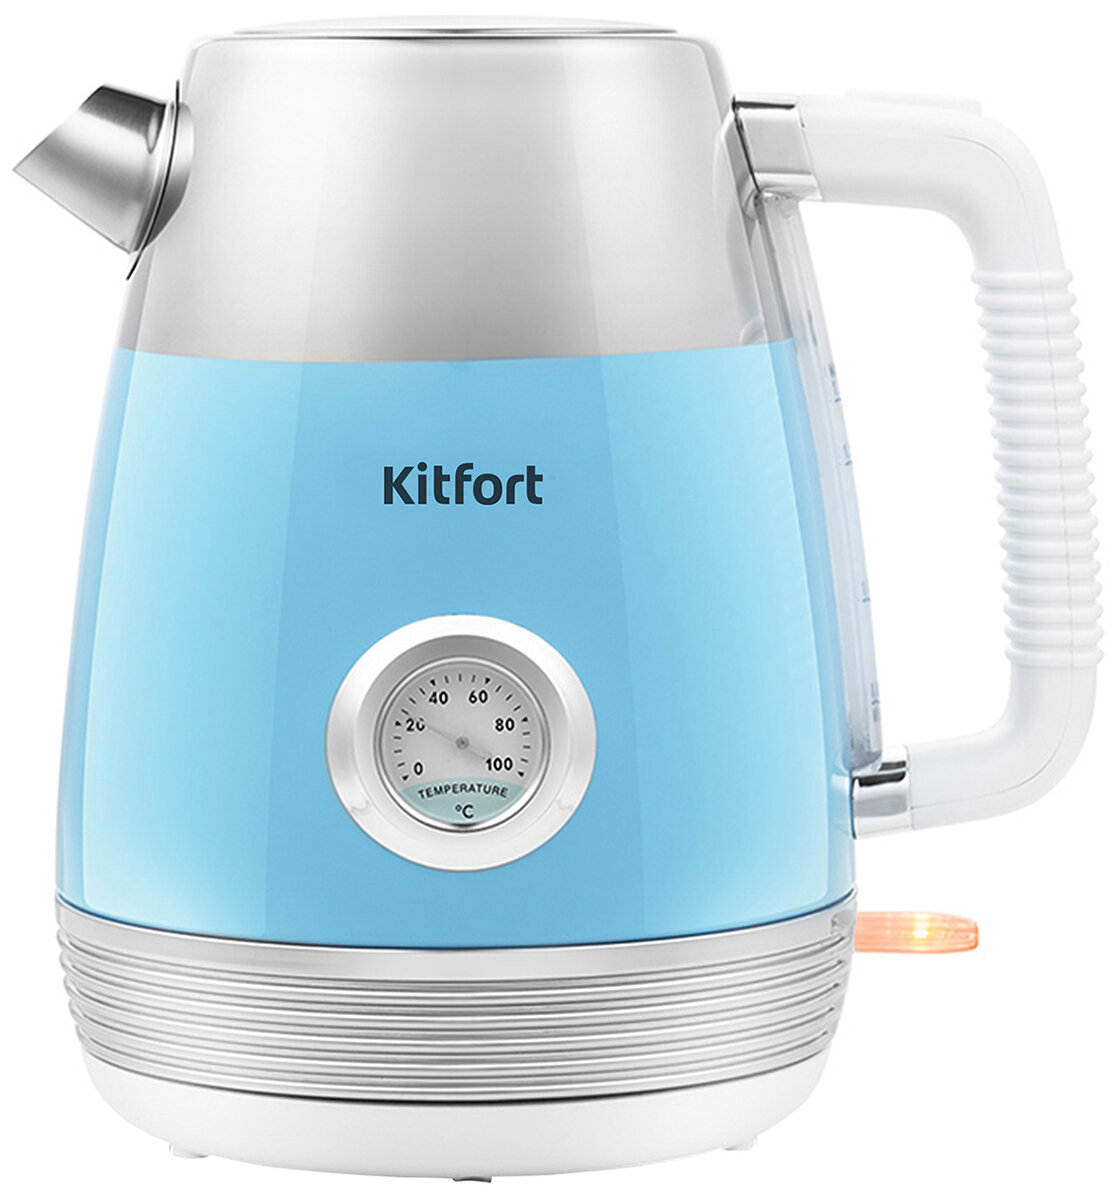   Kitfort -633-4